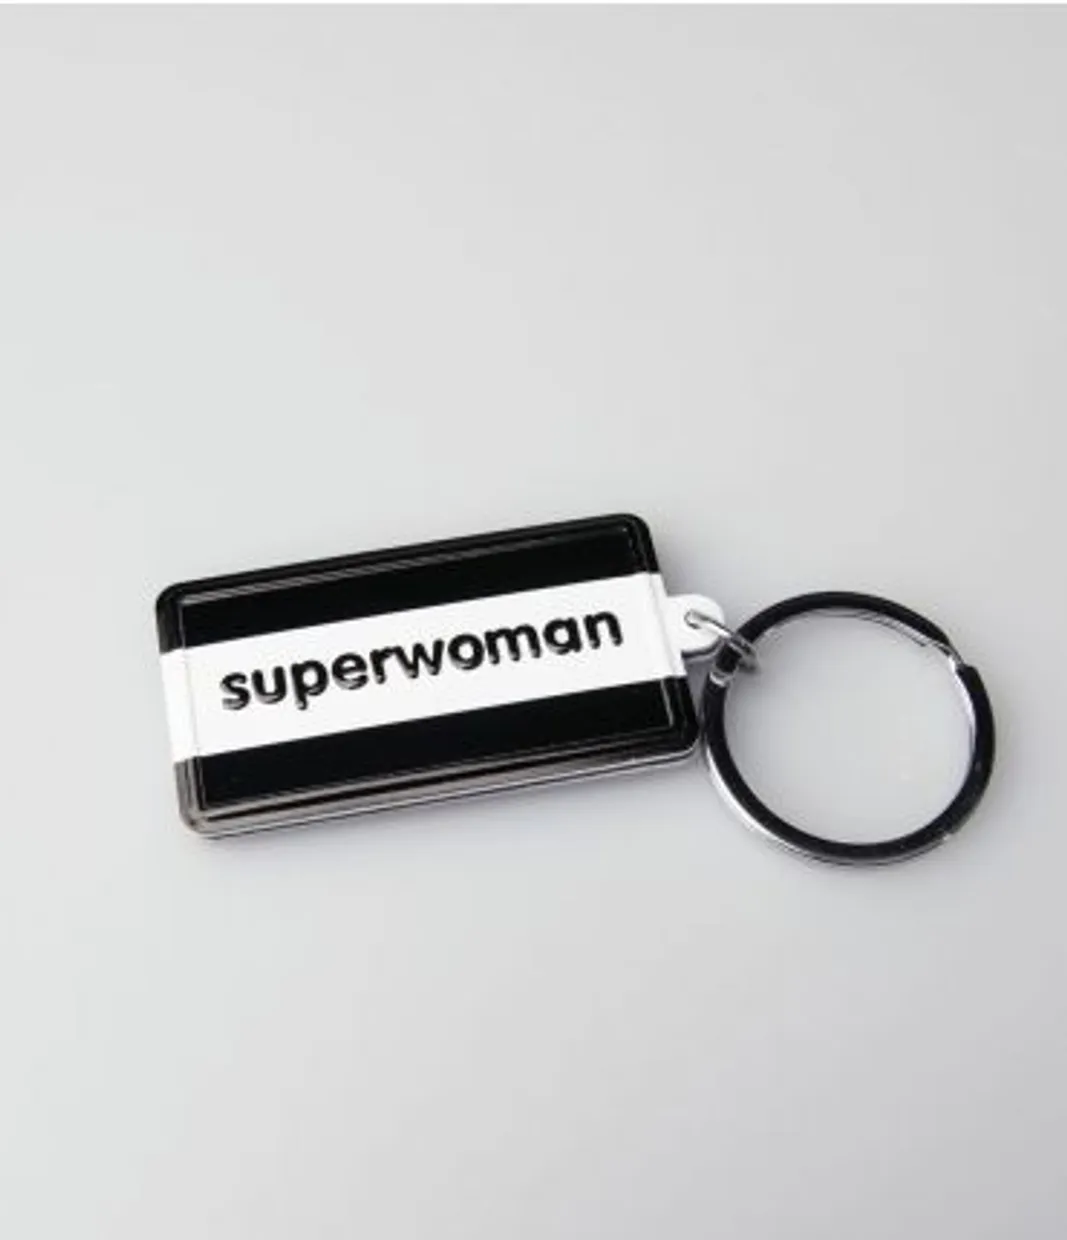 sleutelhanger " SUPERWOMAN"